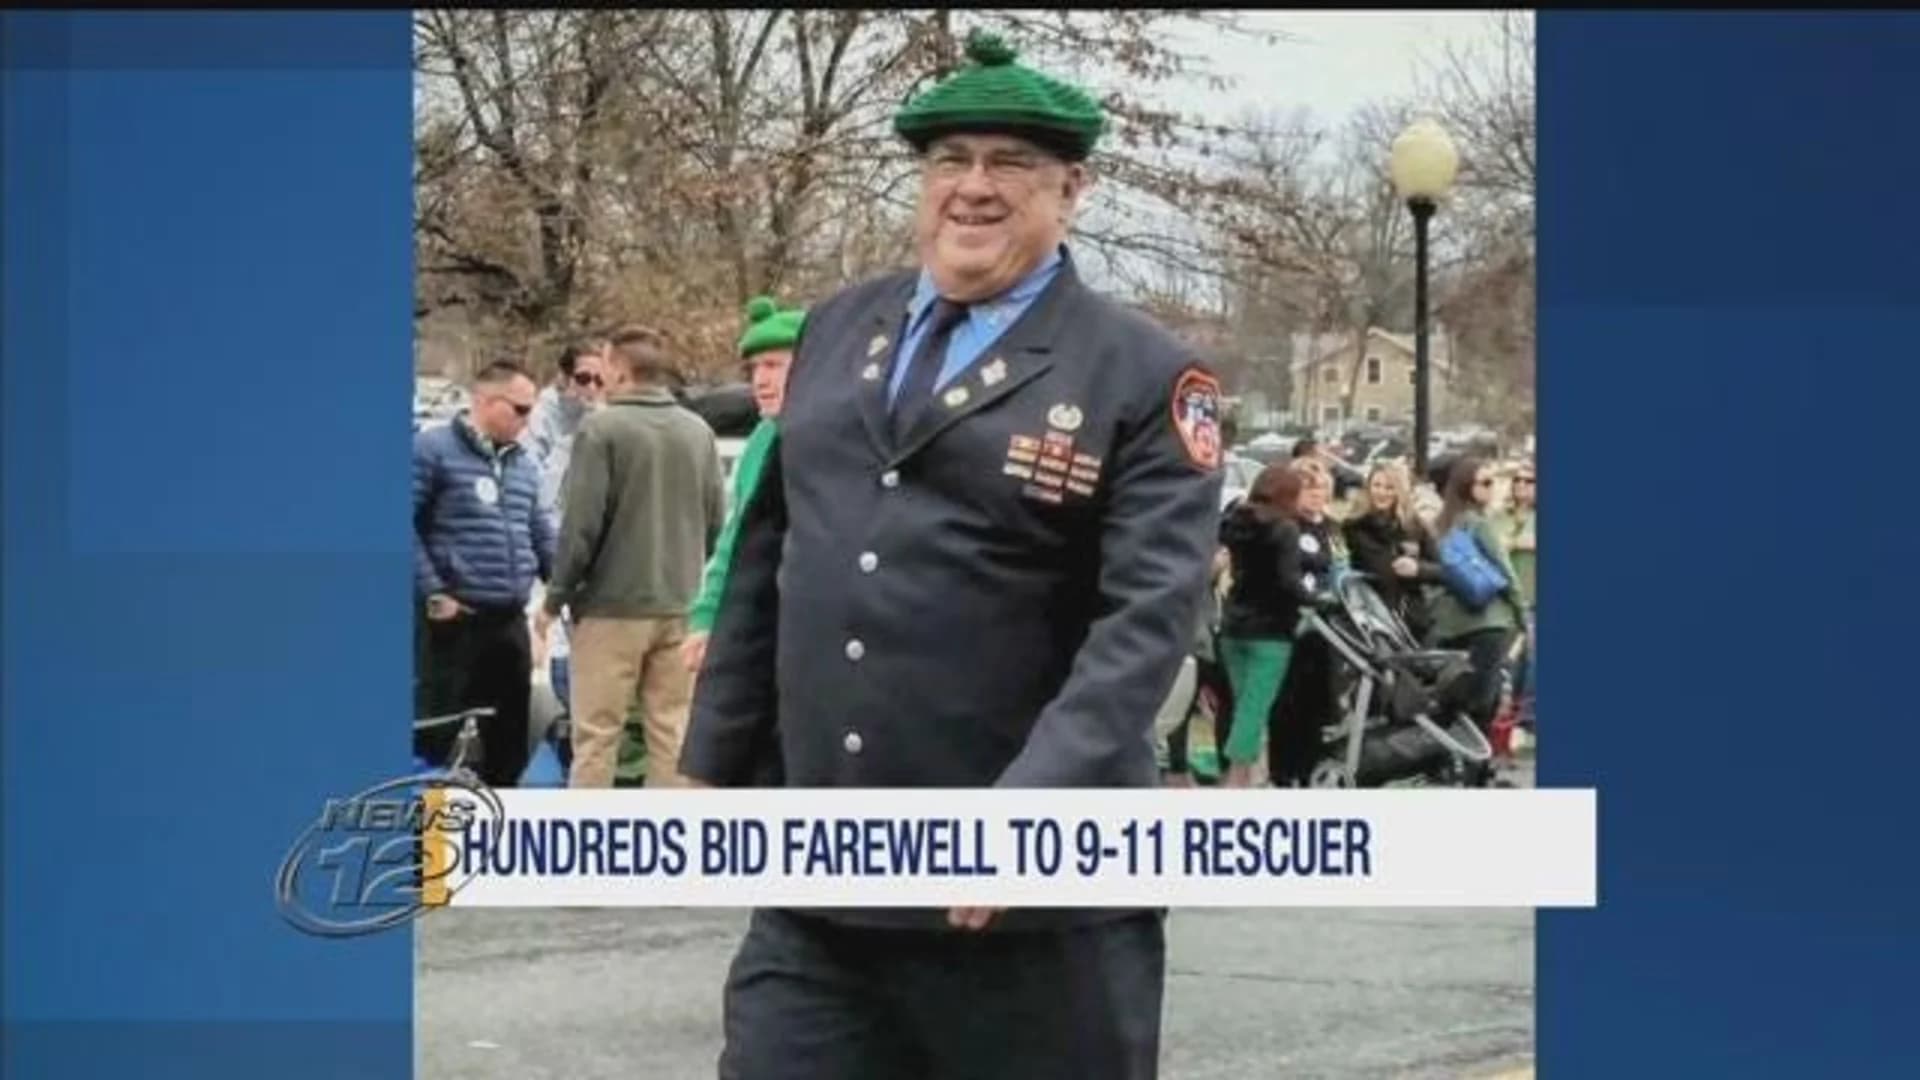 Loved ones honor fallen FDNY firefighter